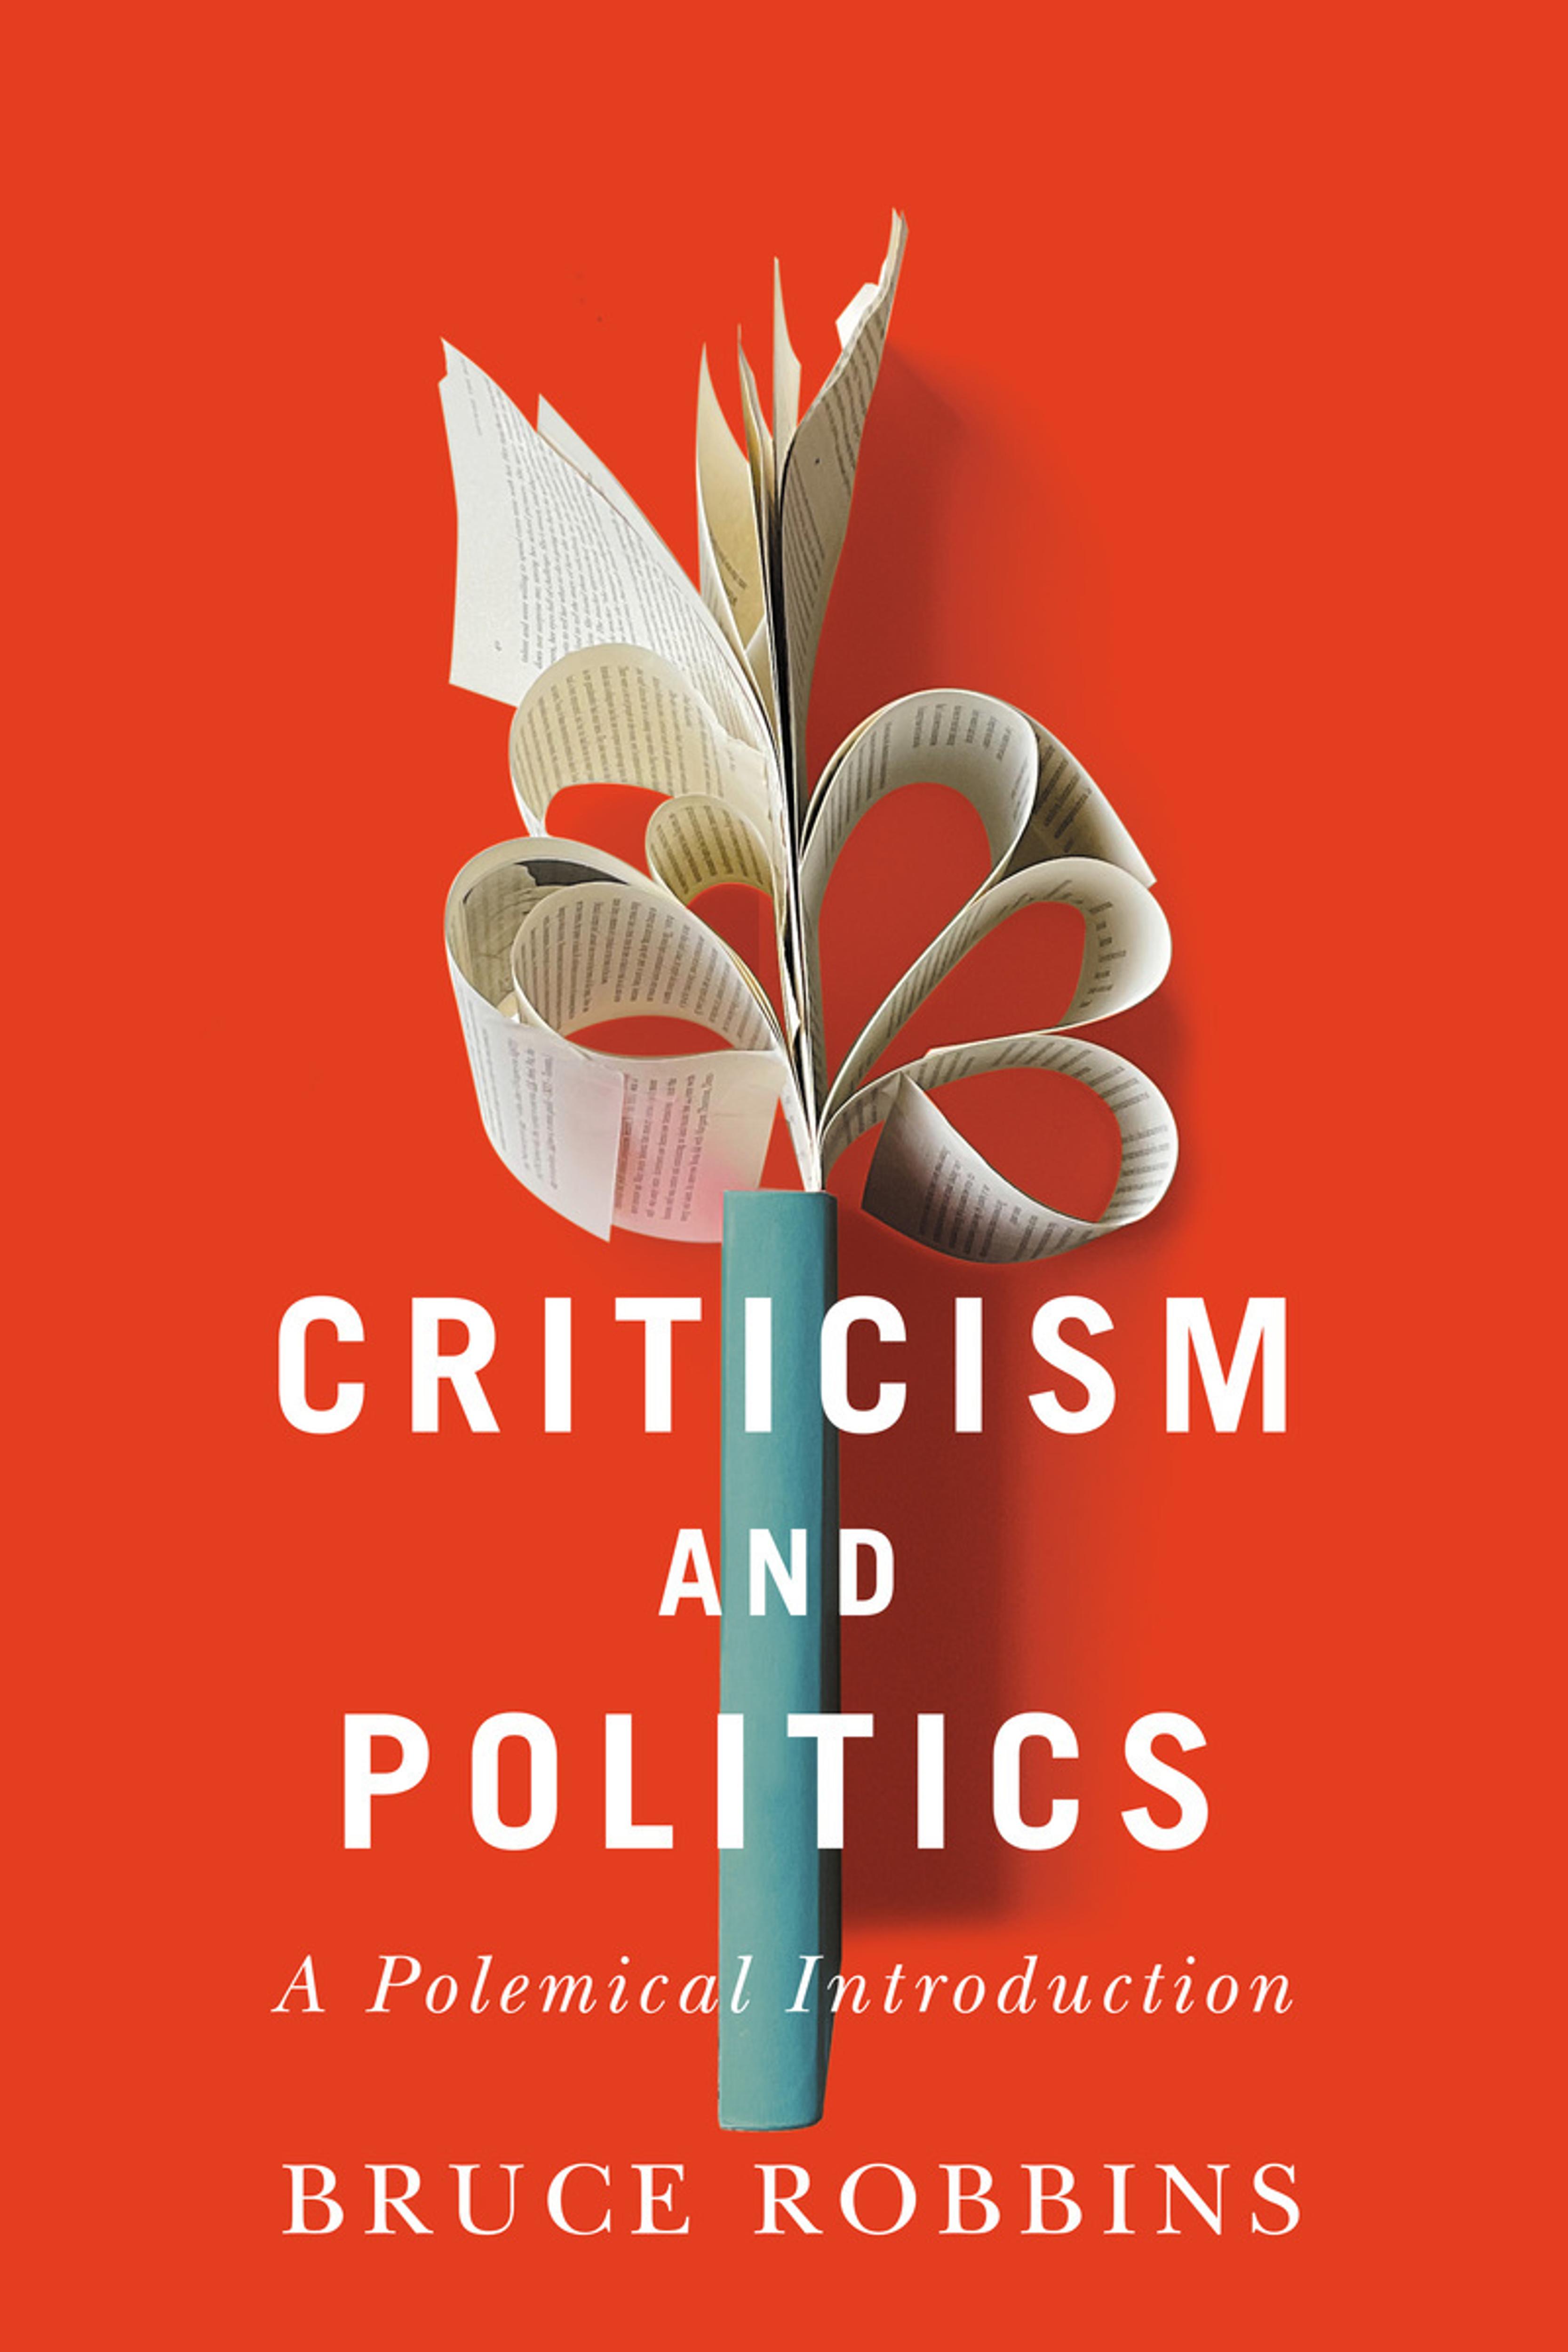 Deprovincializing Criticism: On Bruce Robbins’s “Criticism and Politics”